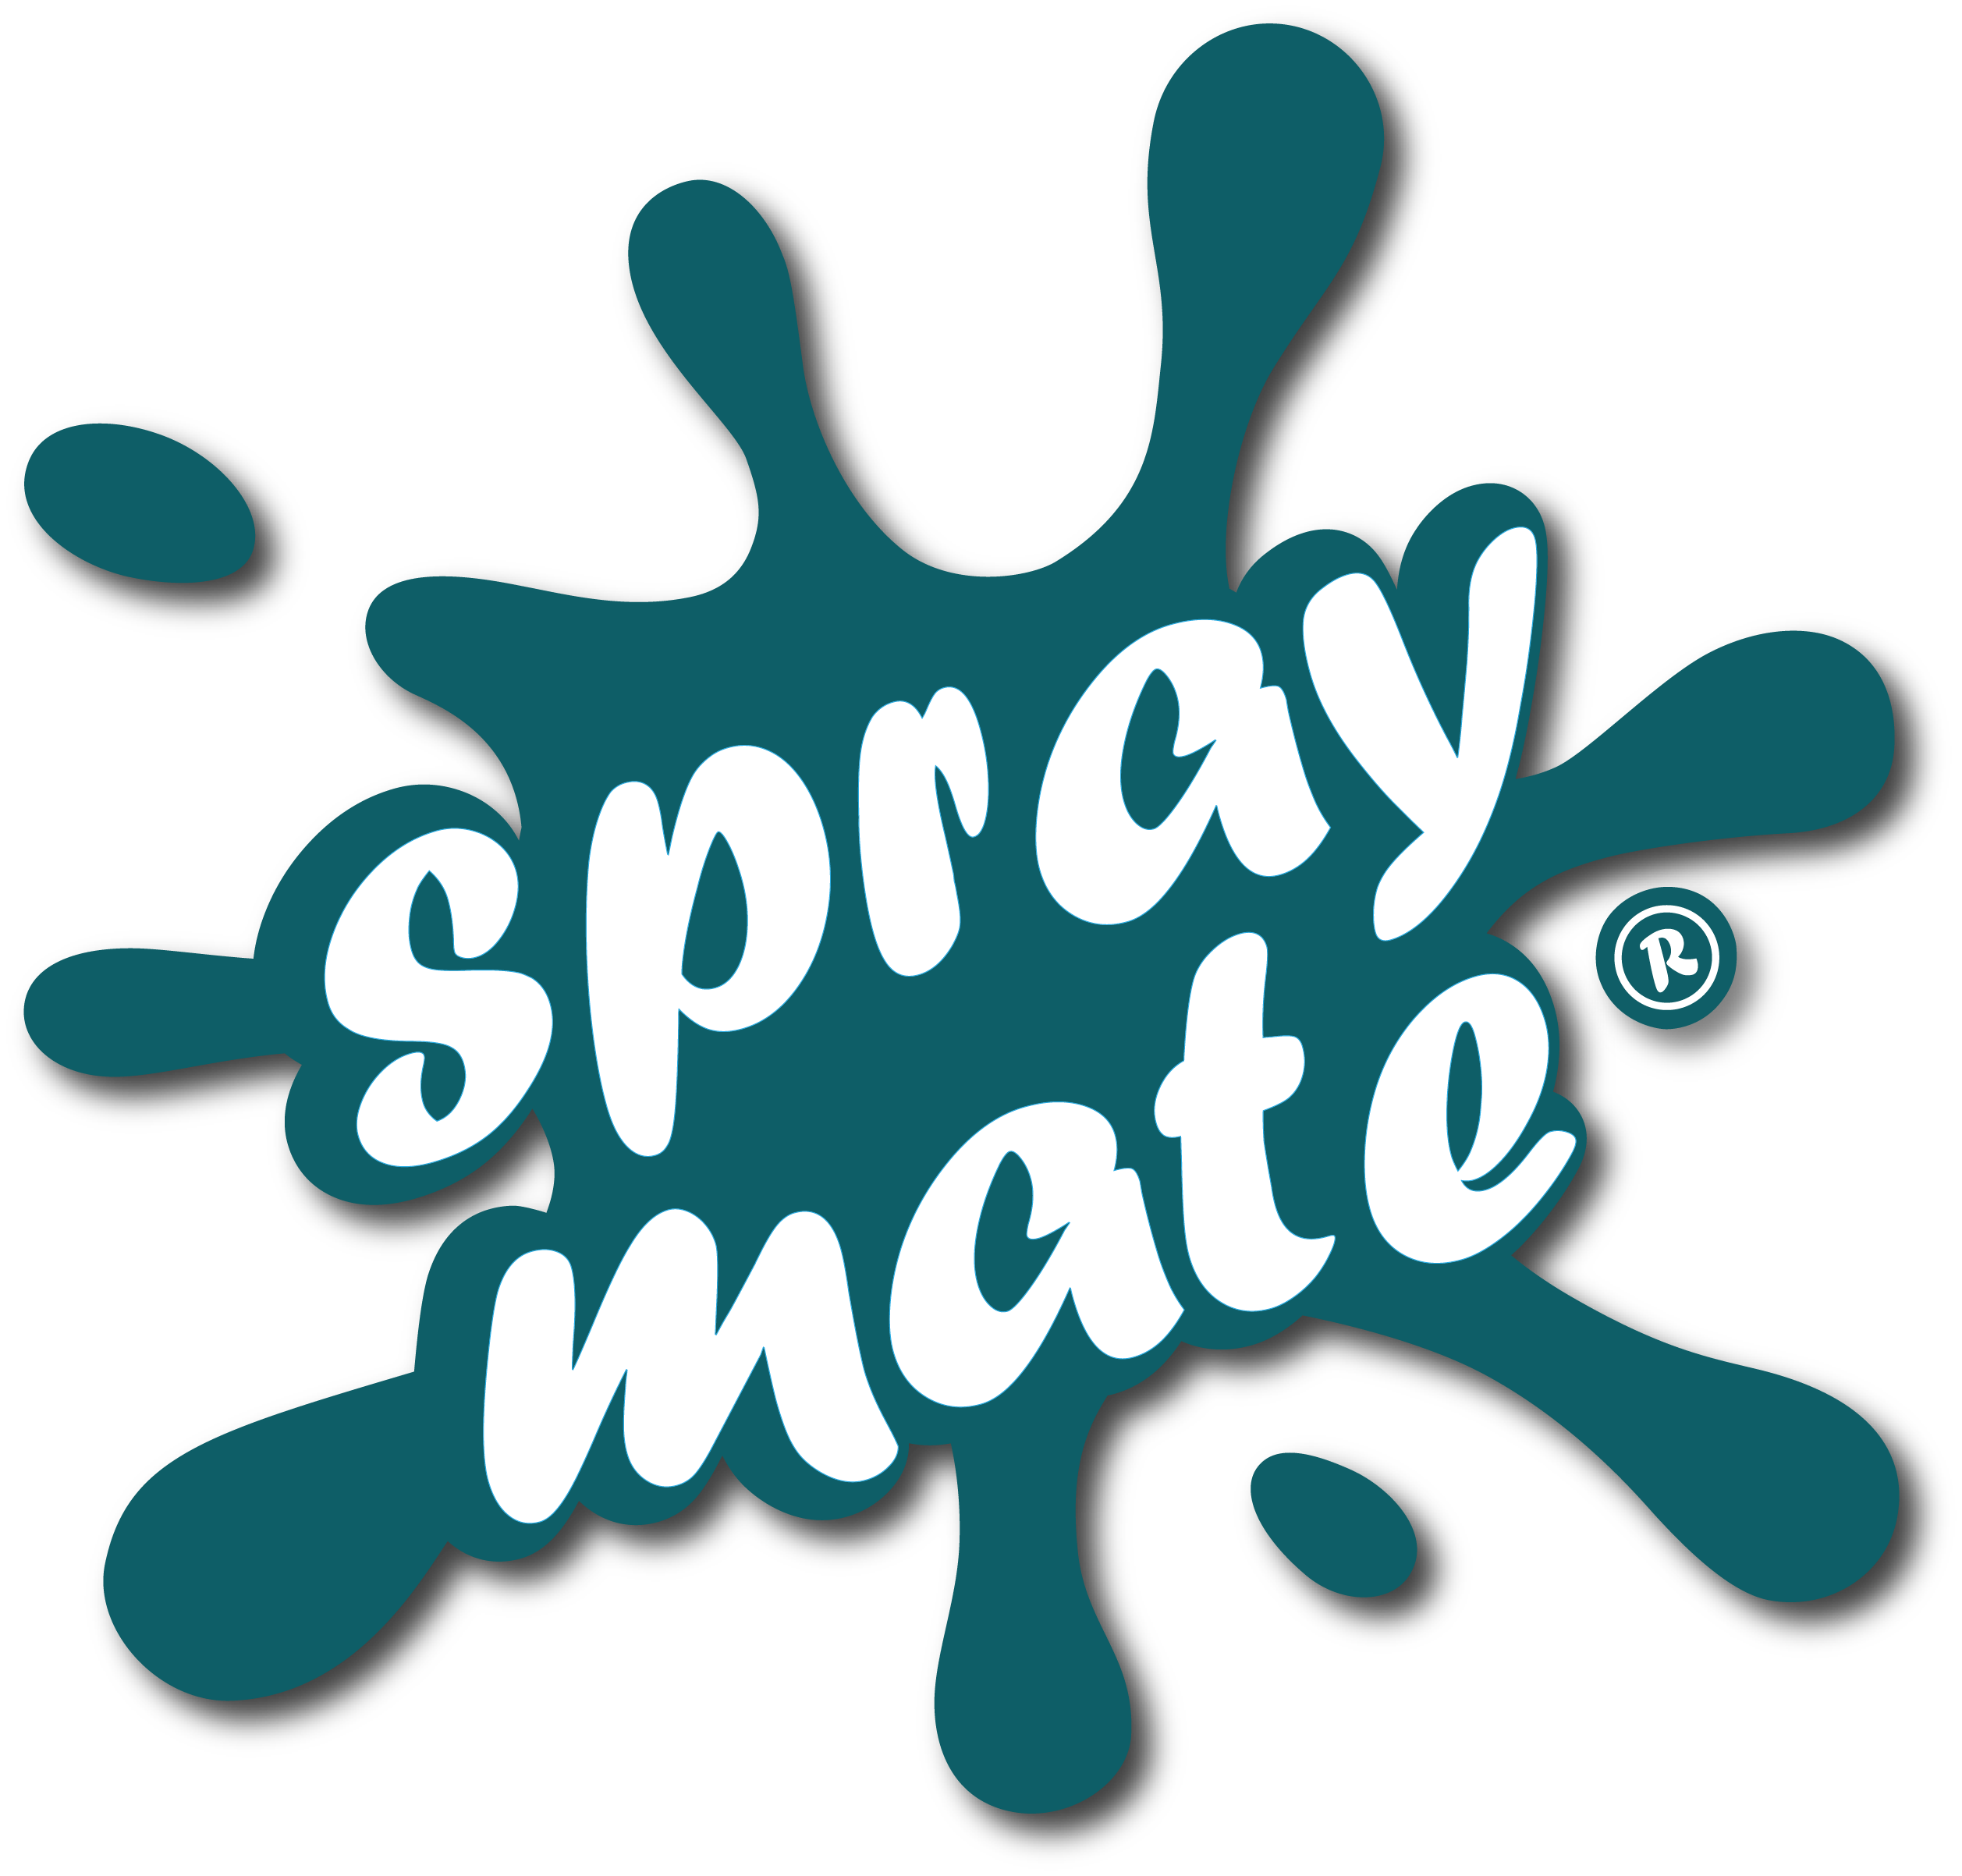 SprayMate